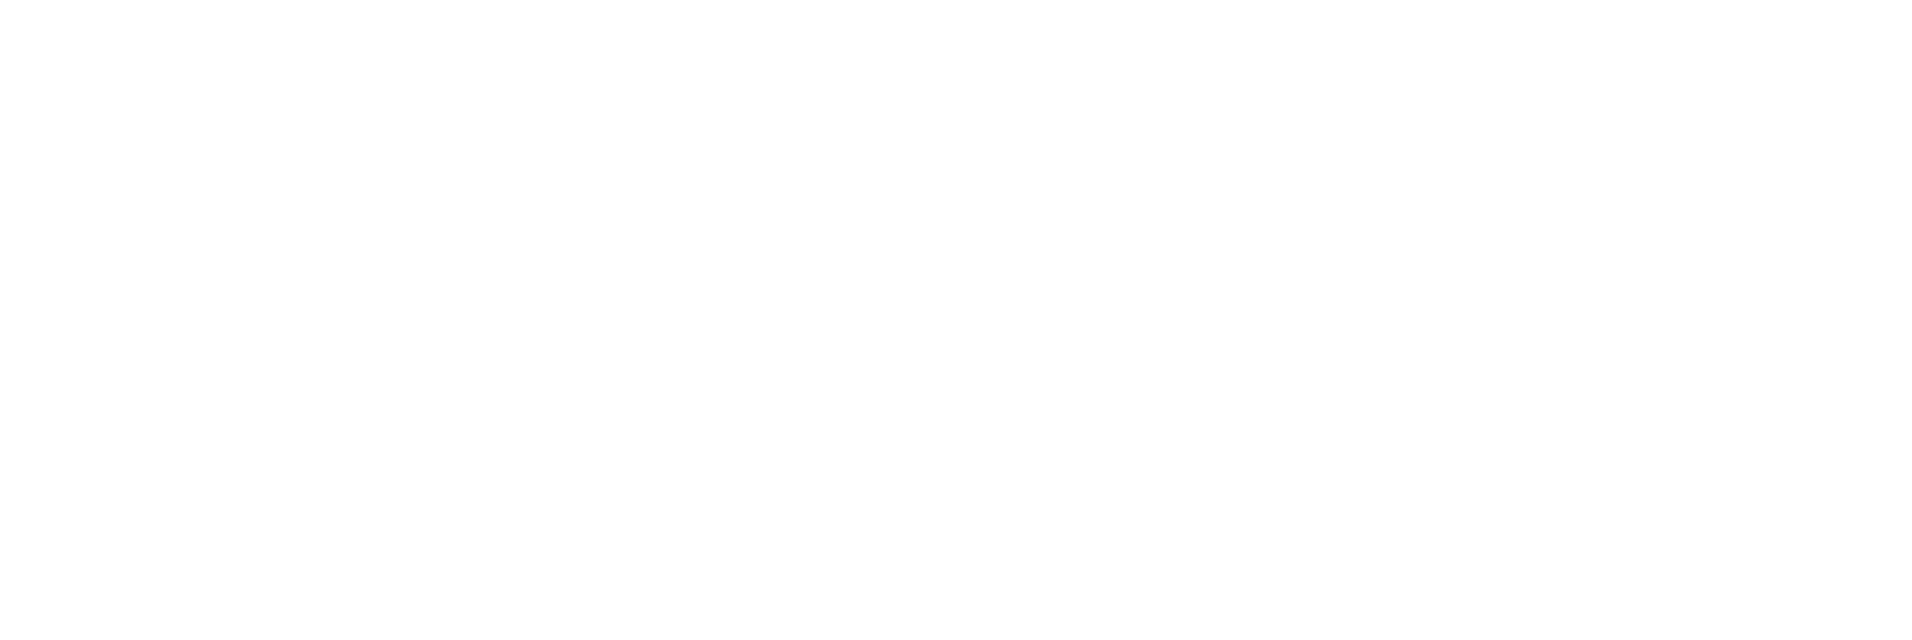 CONNOLLY ANIMAL CLINIC P C